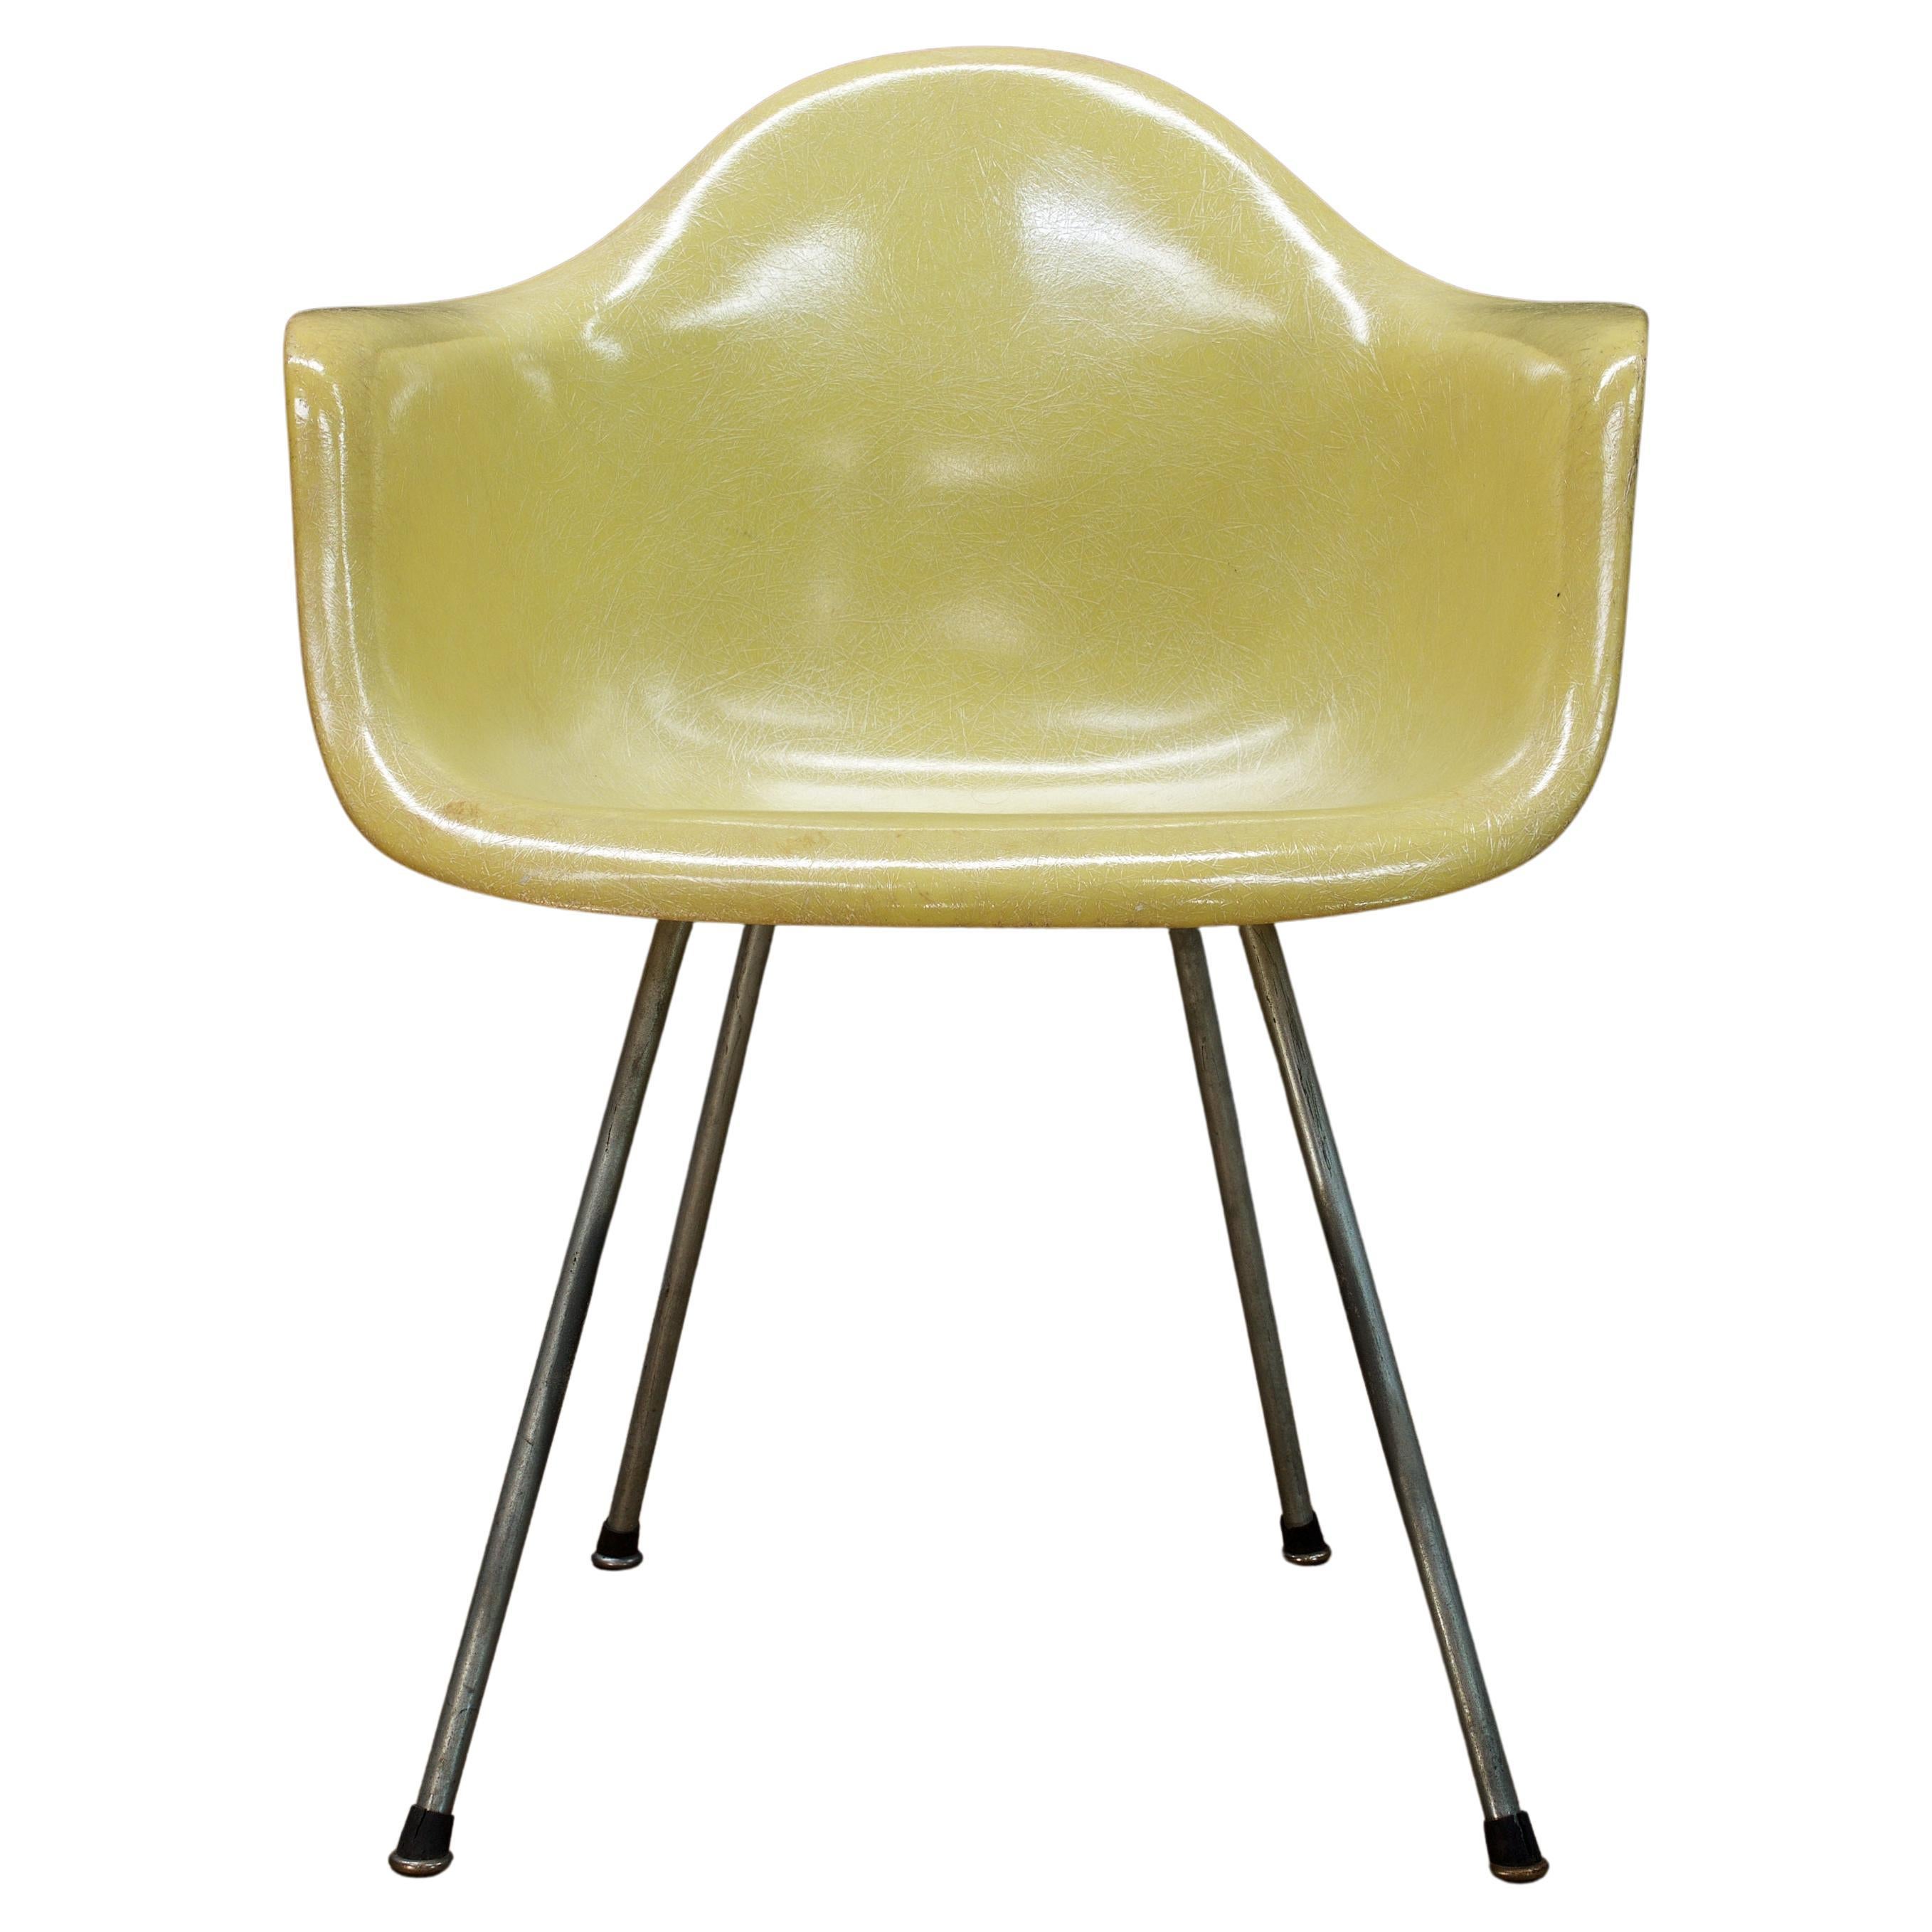 Vintage 1950s Lemon Yellow DAX Chair Charles+Ray Eames Zenith Herman Miller